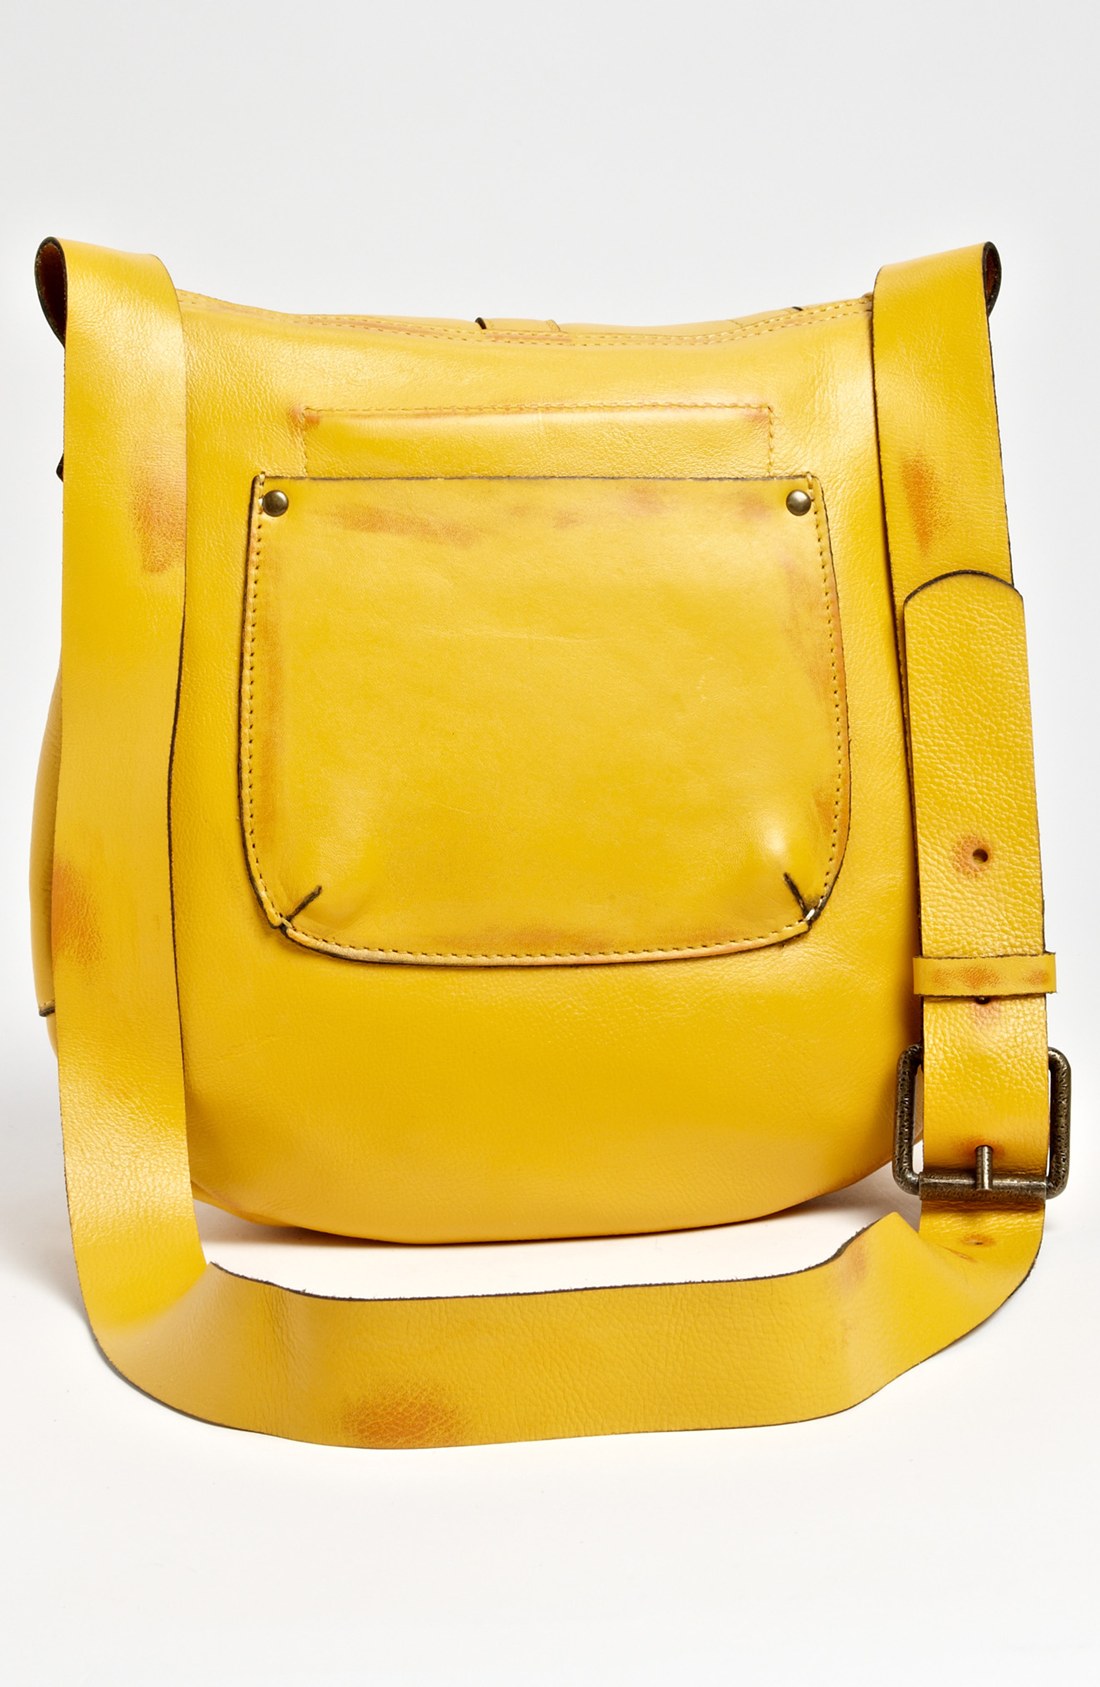 Patricia nash Barcelona Overdye Leather Crossbody Bag in Yellow (vintage yellow) | Lyst